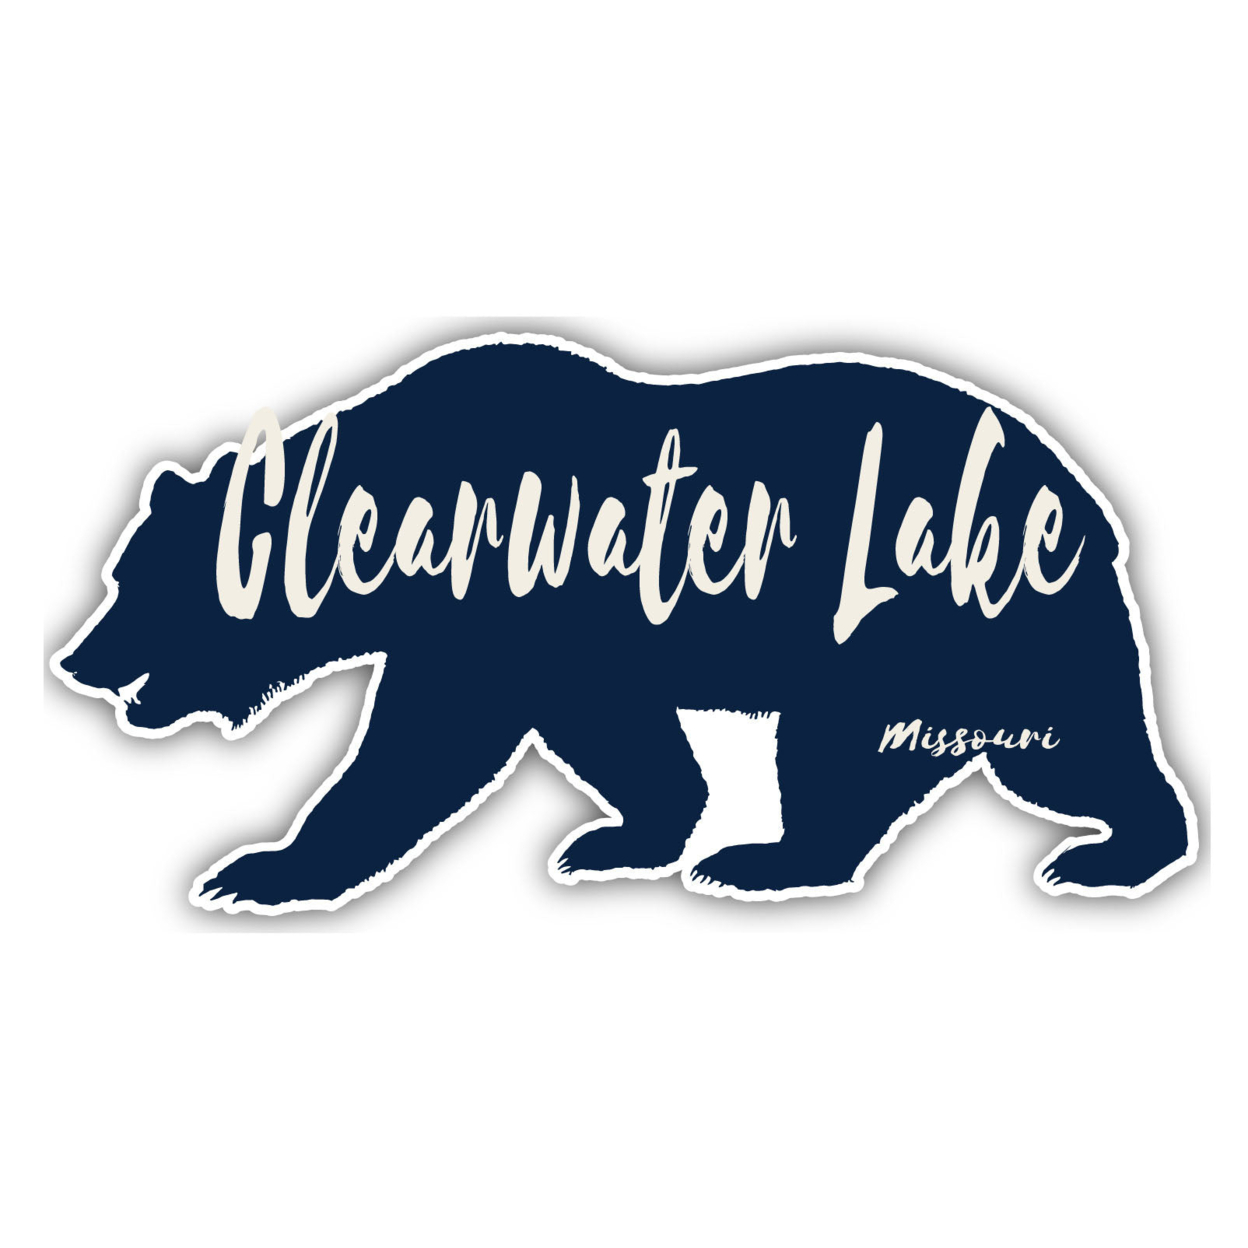 Clearwater Lake Missouri Souvenir Decorative Stickers (Choose Theme And Size) - Single Unit, 8-Inch, Bear